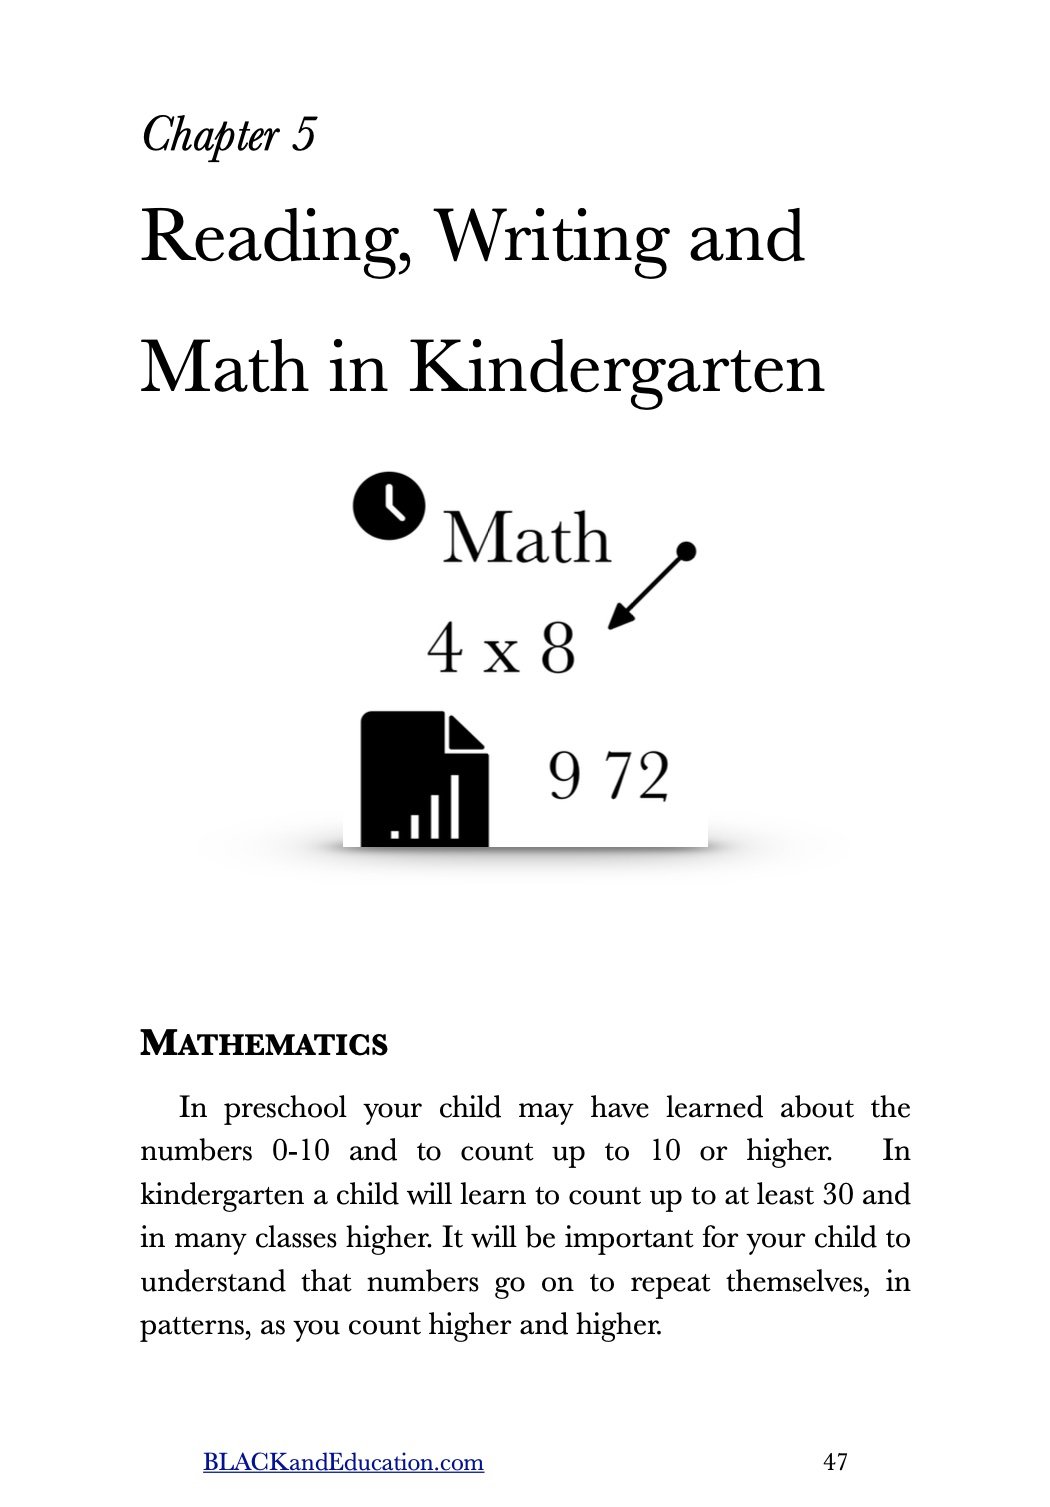 K Reading and writing in Kindergarten.jpg